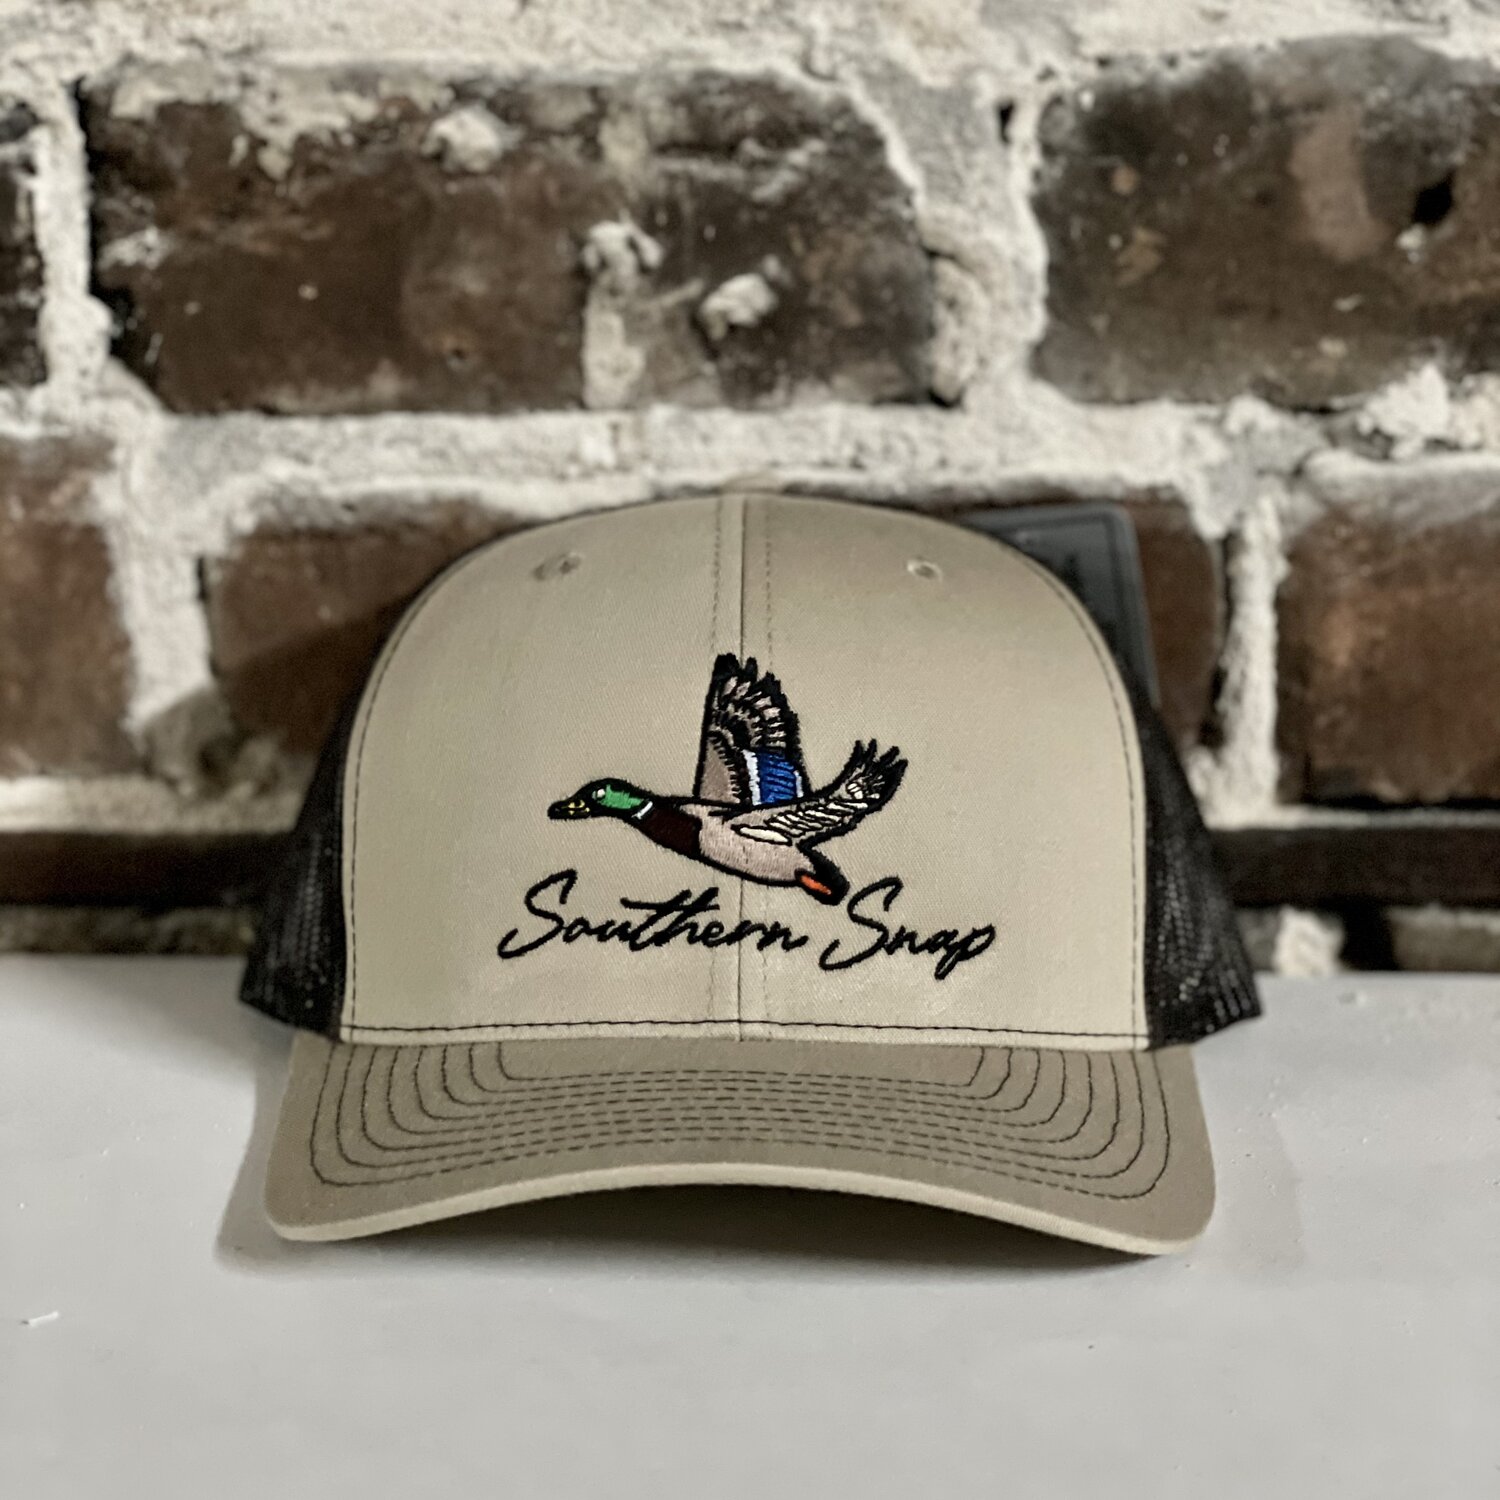 Joseph's Clothier — Patagonia & Southern Snap Hats